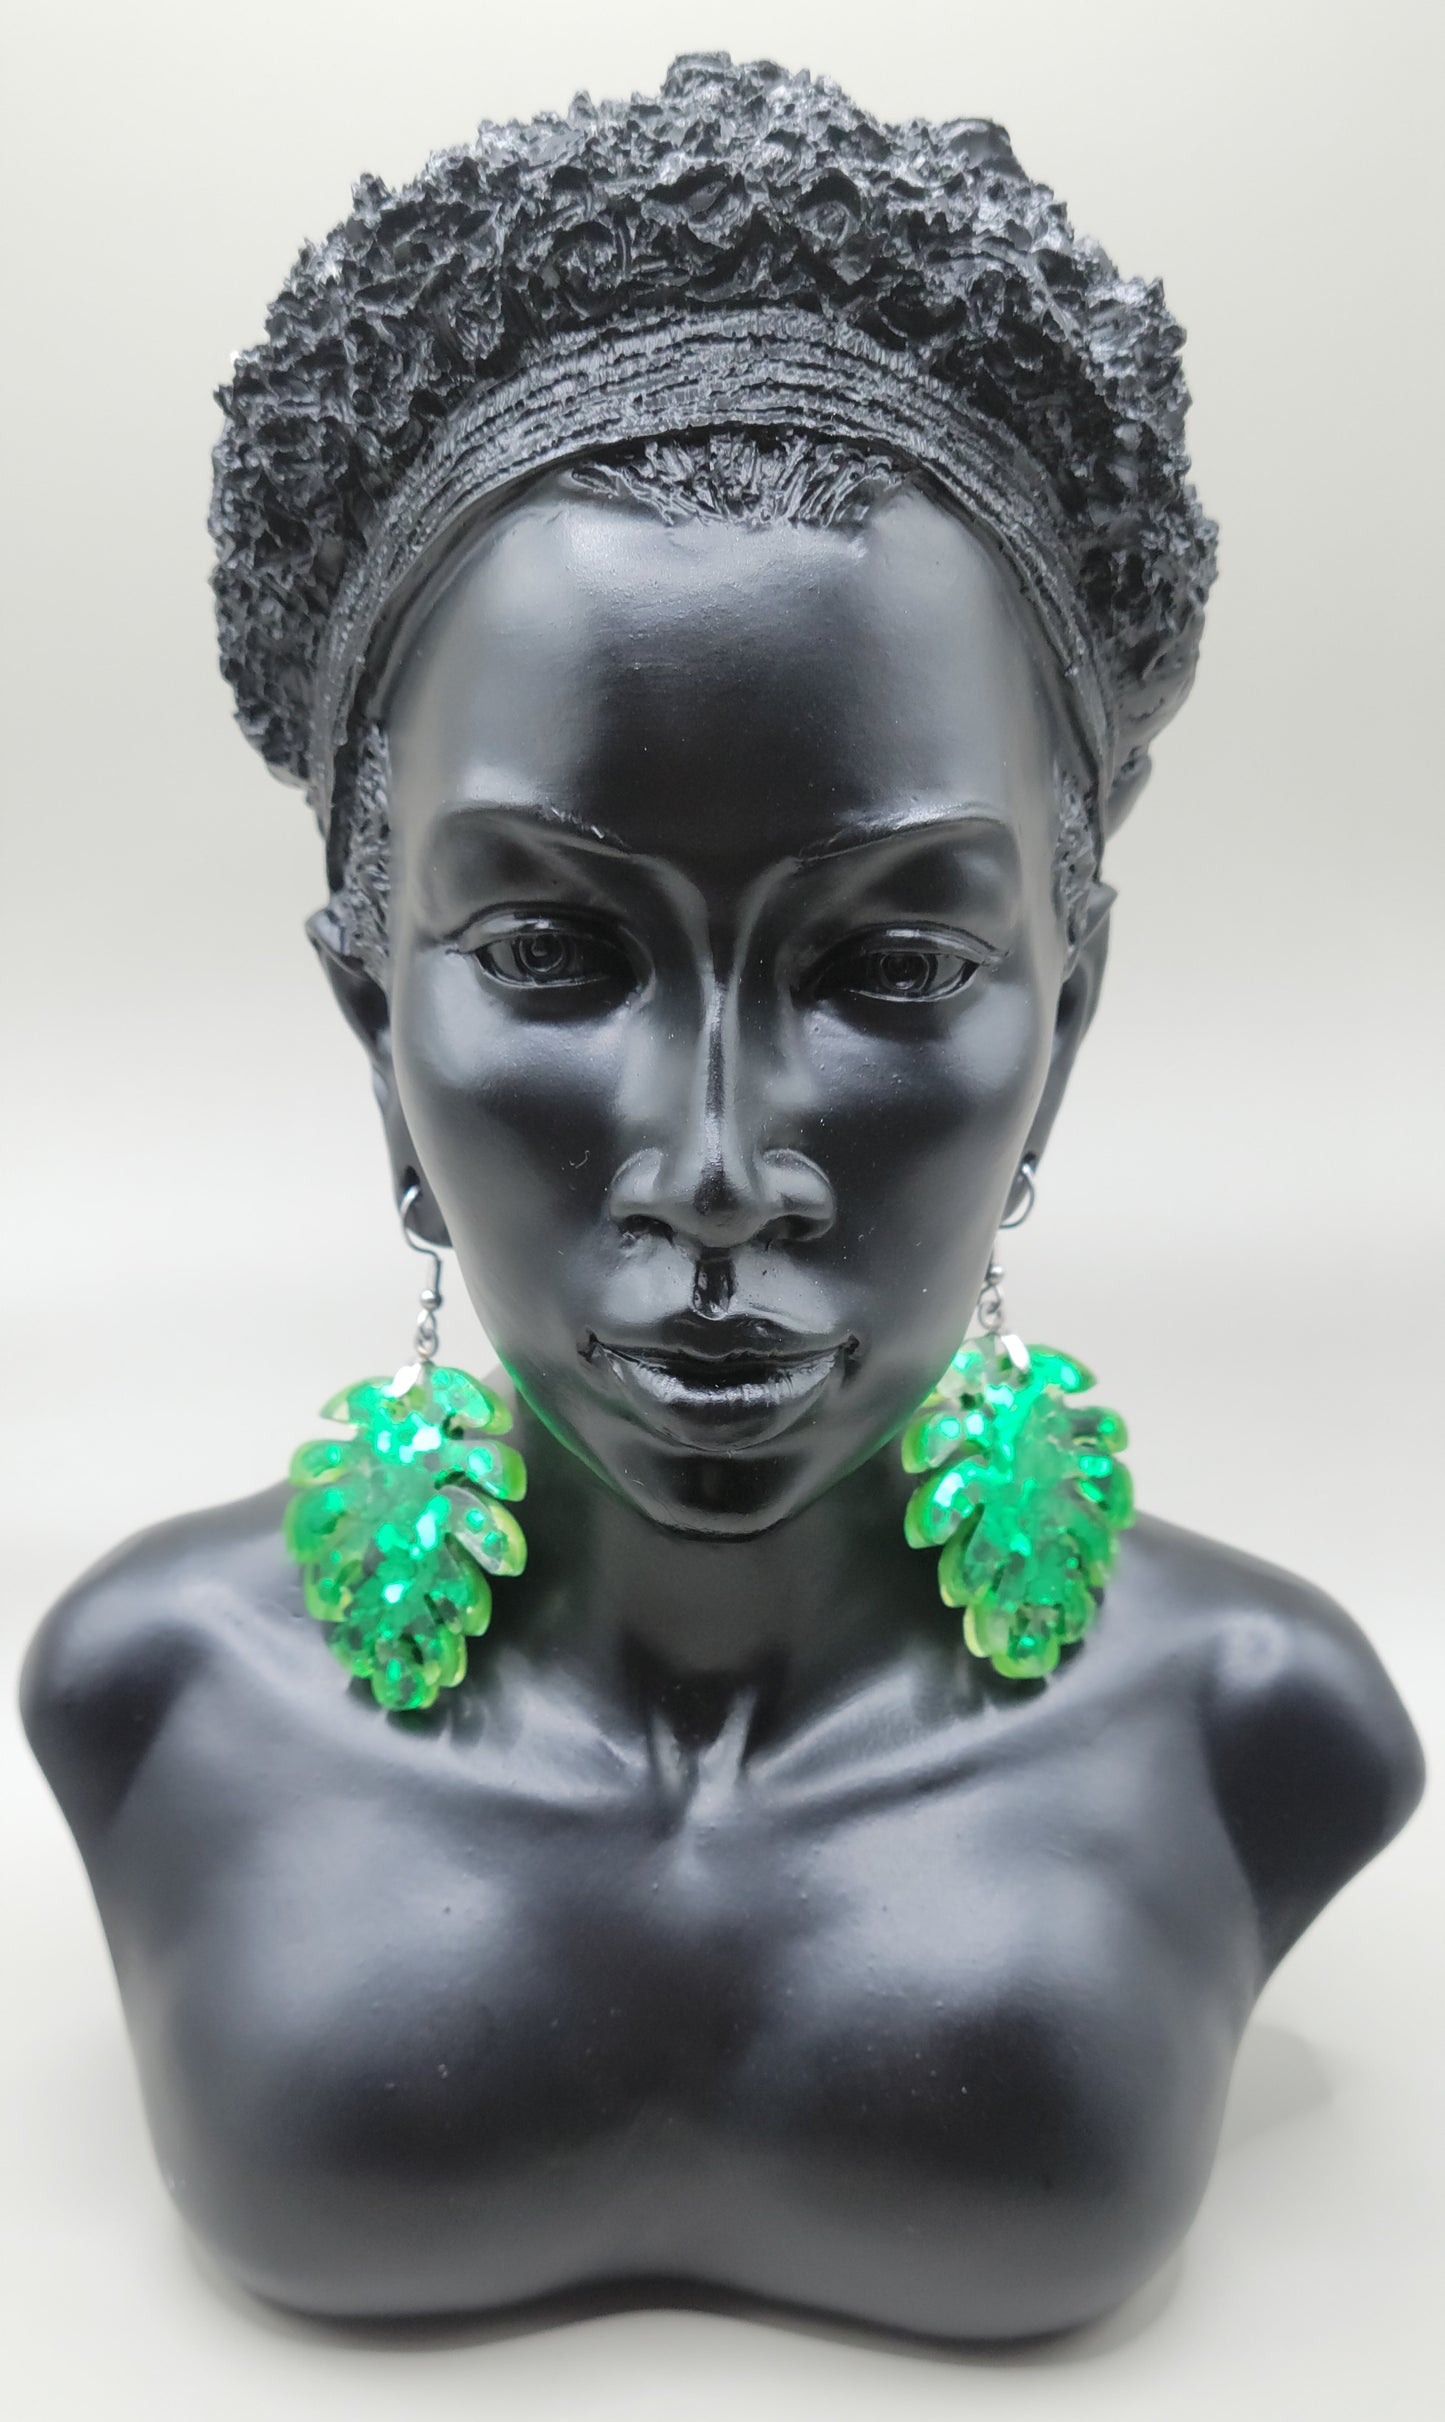 Green leaf earrings